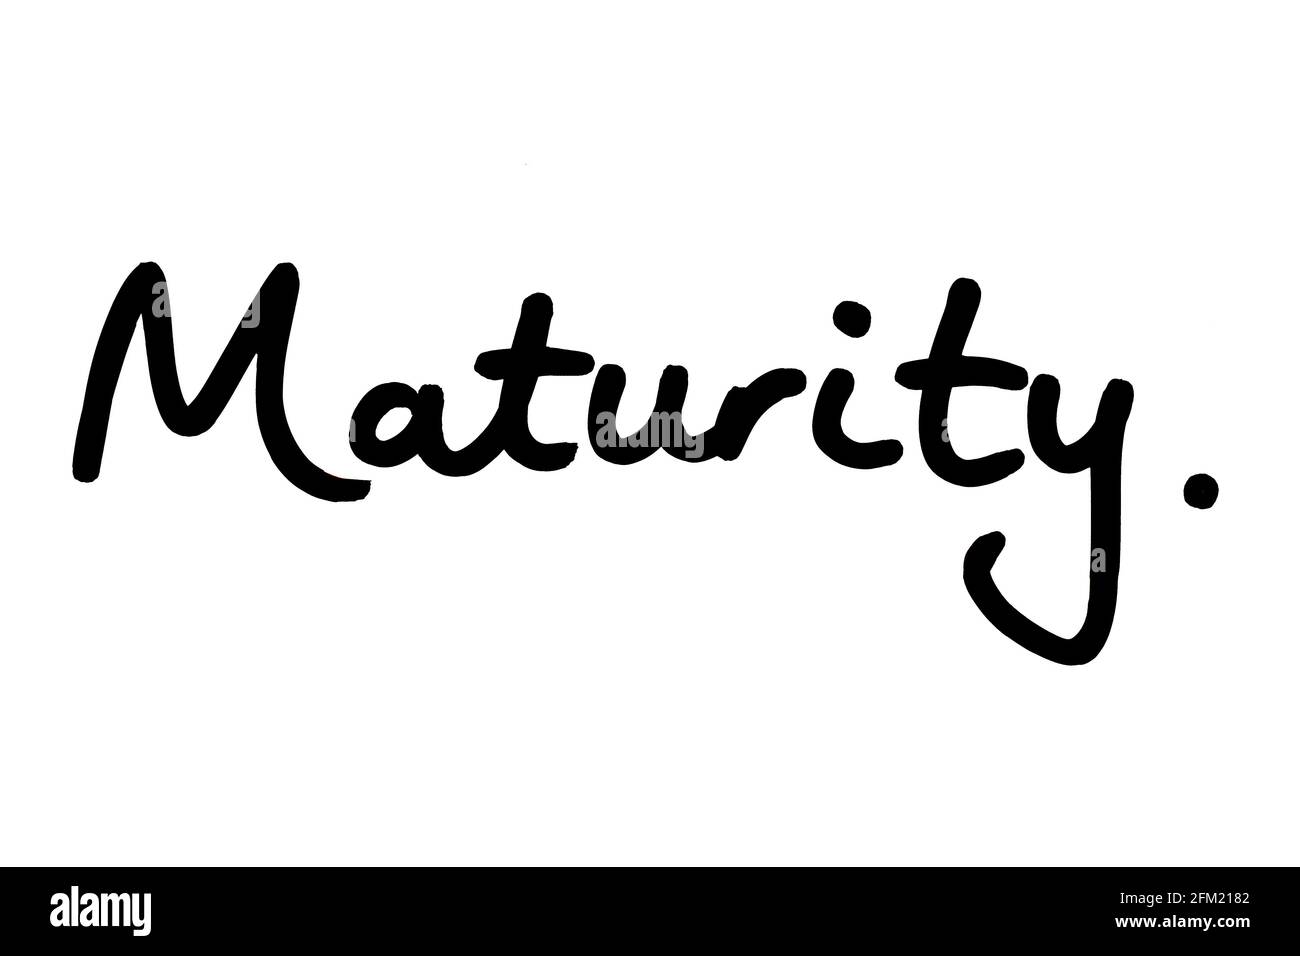 Maturity, hndwritten on a white background. Stock Photo